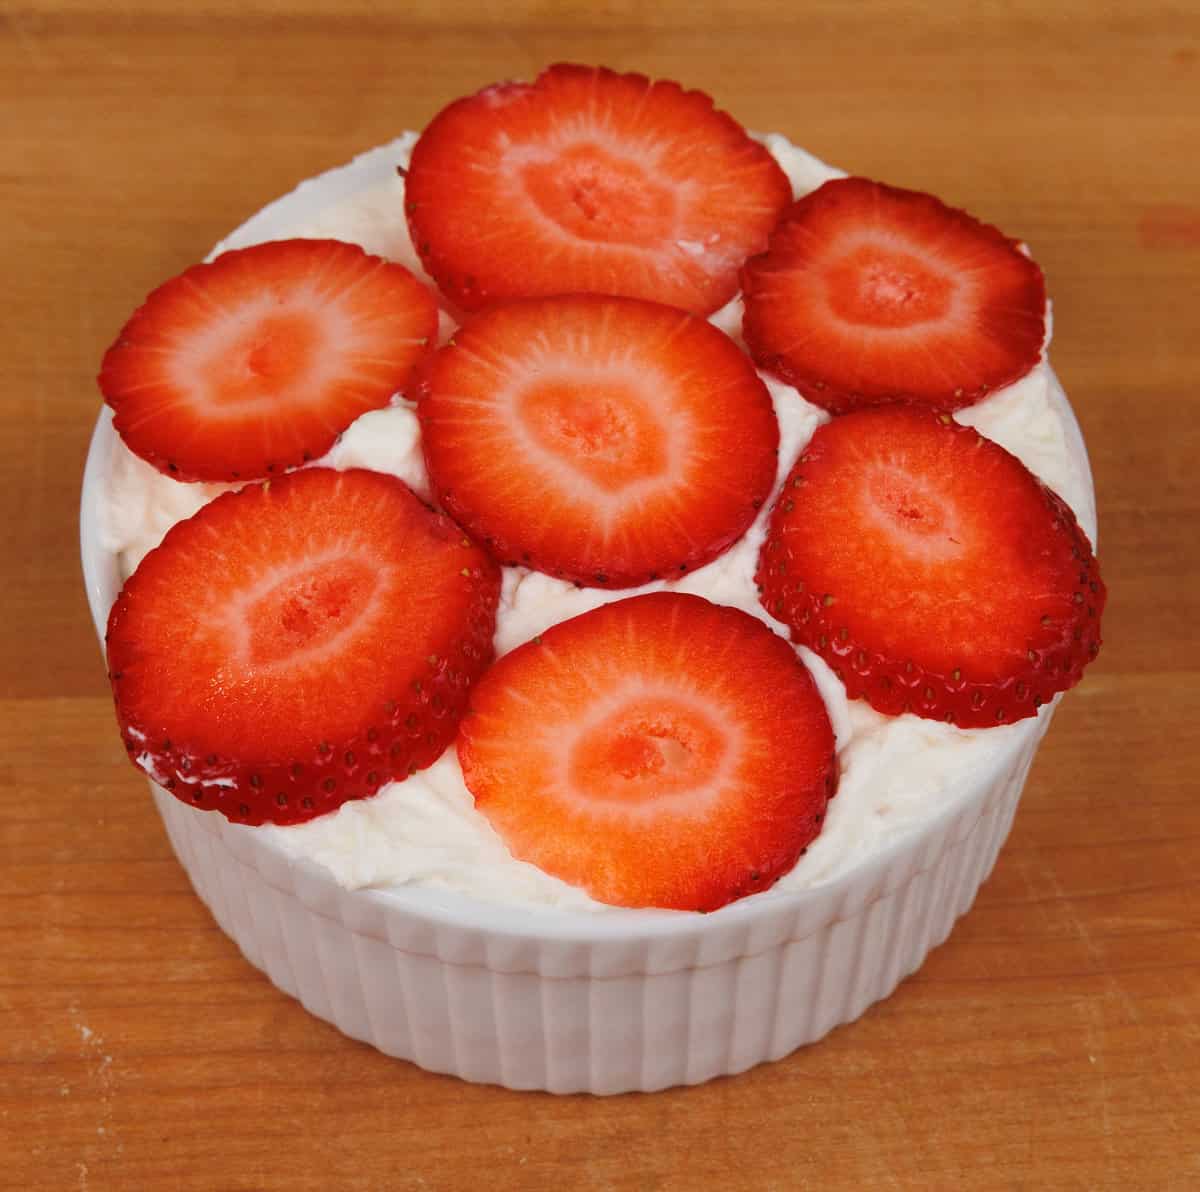 assembling a small strawberry icebox cake in a ramekin.